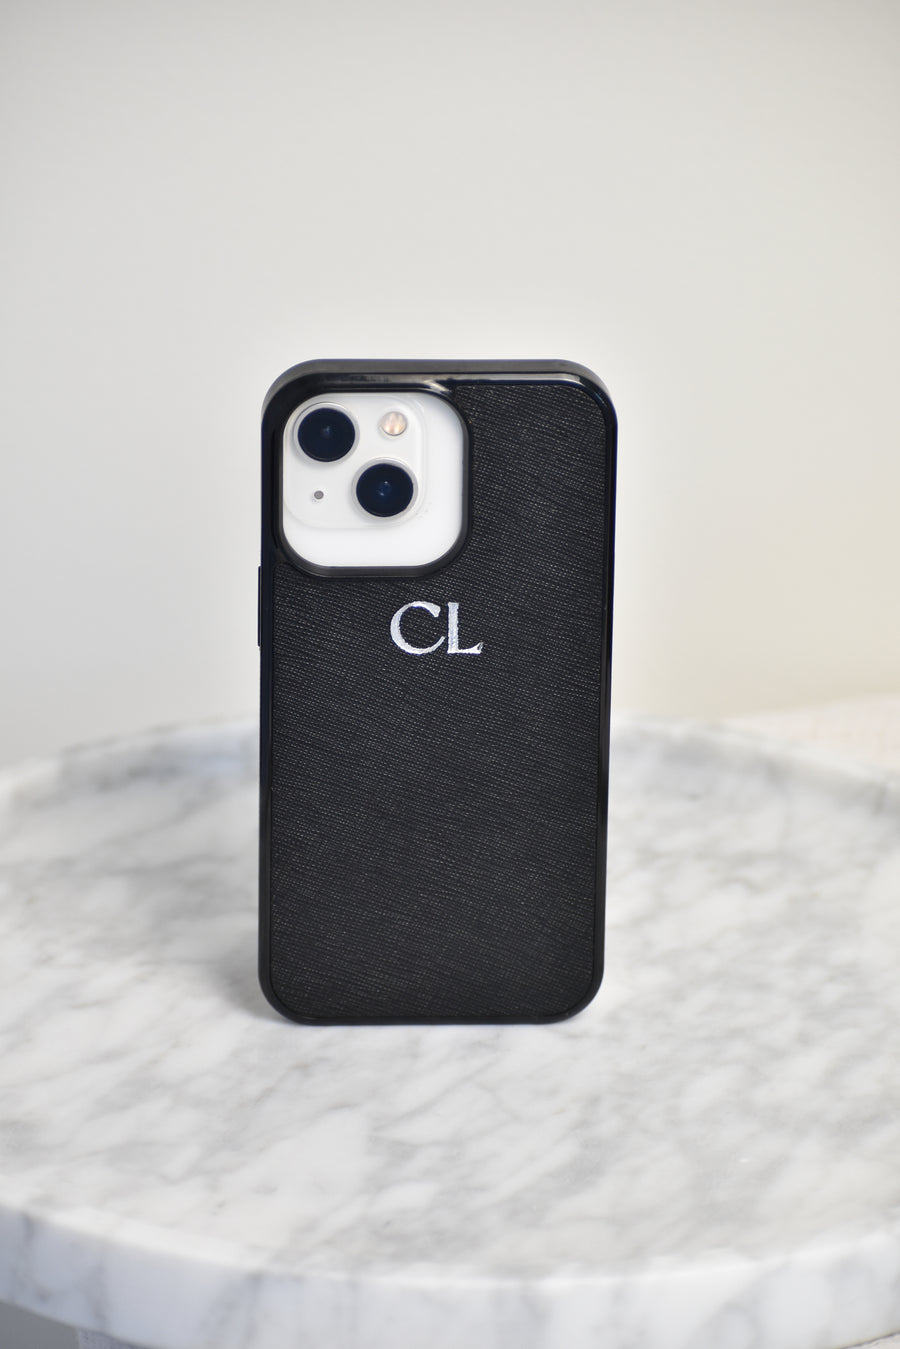 iPhone 11 Personalised Leather Case -  Black & Sandy Beige